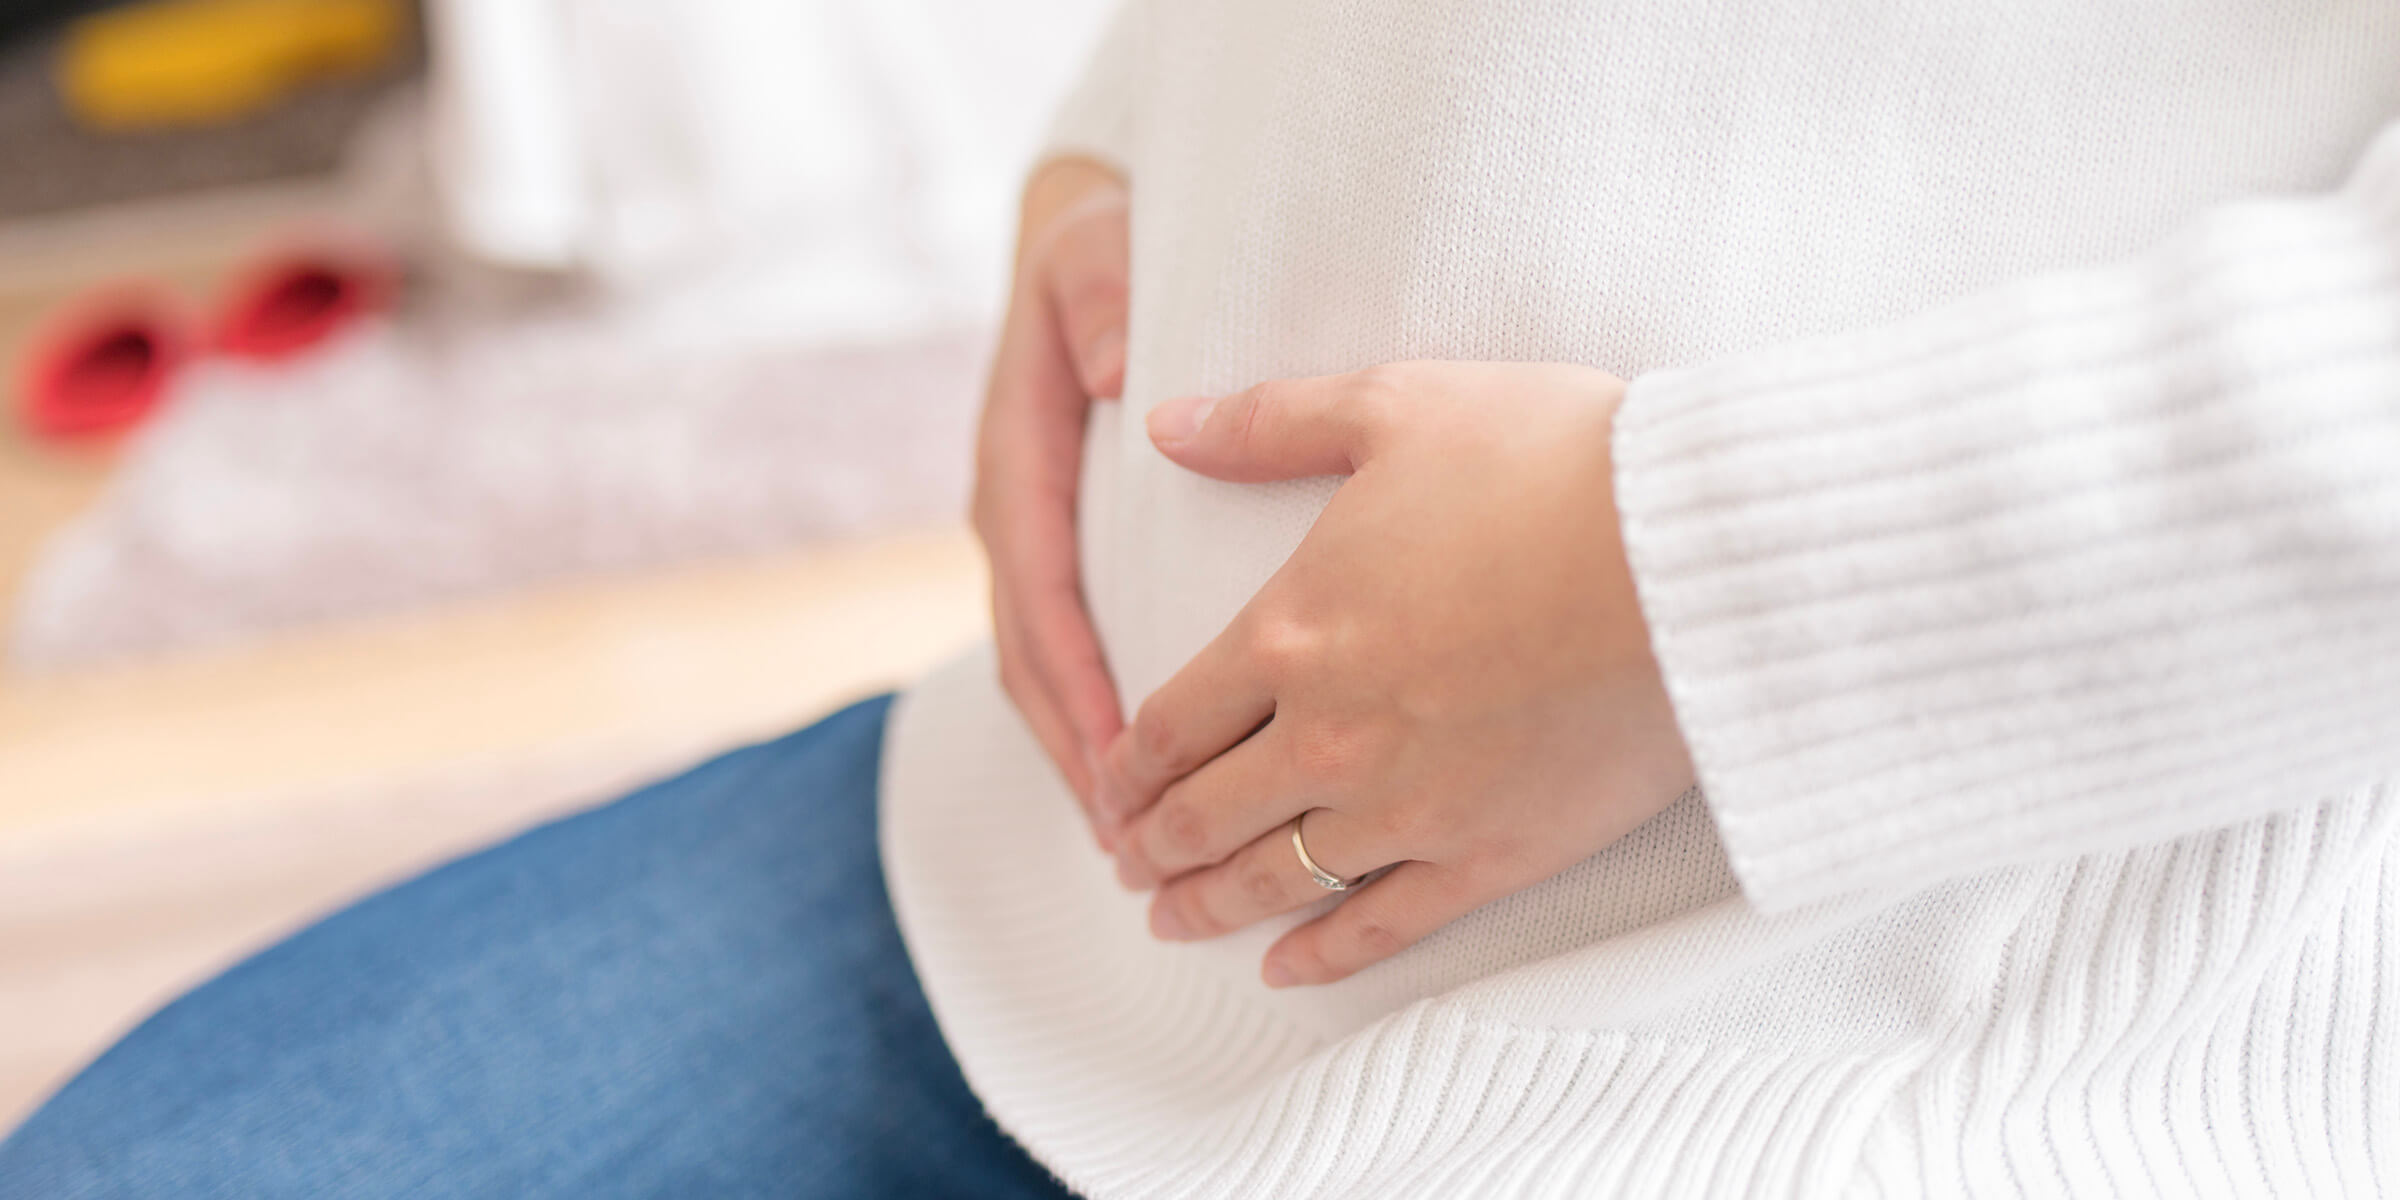 7 Major Risk Factors Of Miscarriage